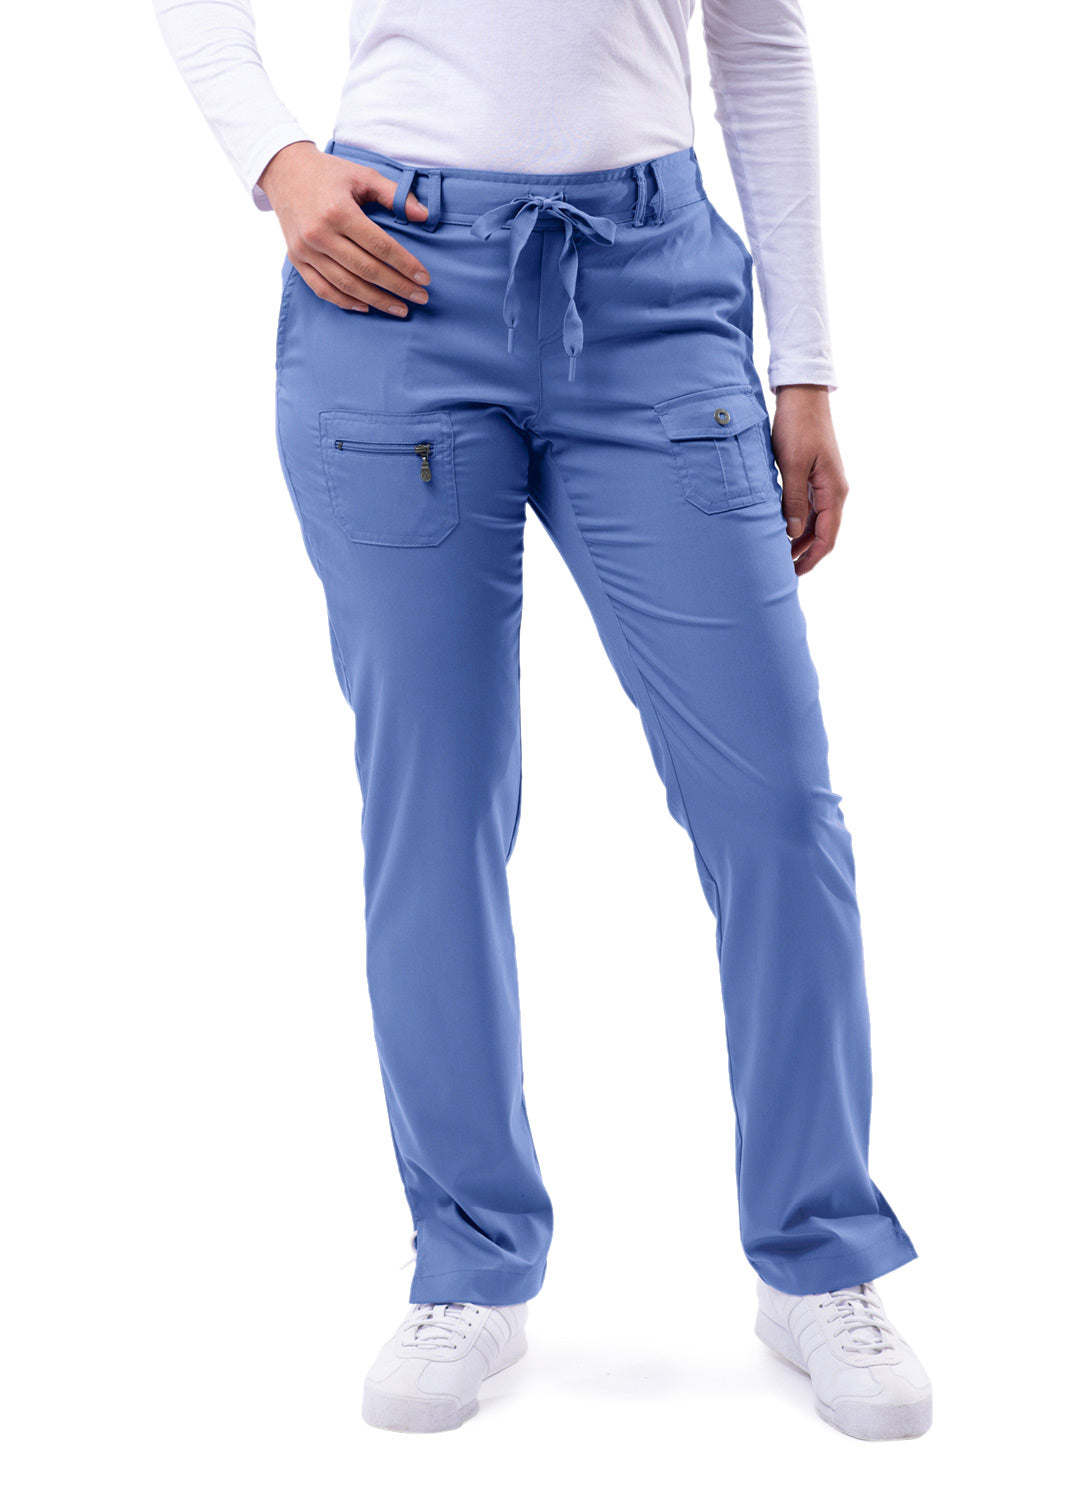 Adar PRO Pants Women's Slim Fit 6 Pocket Pant